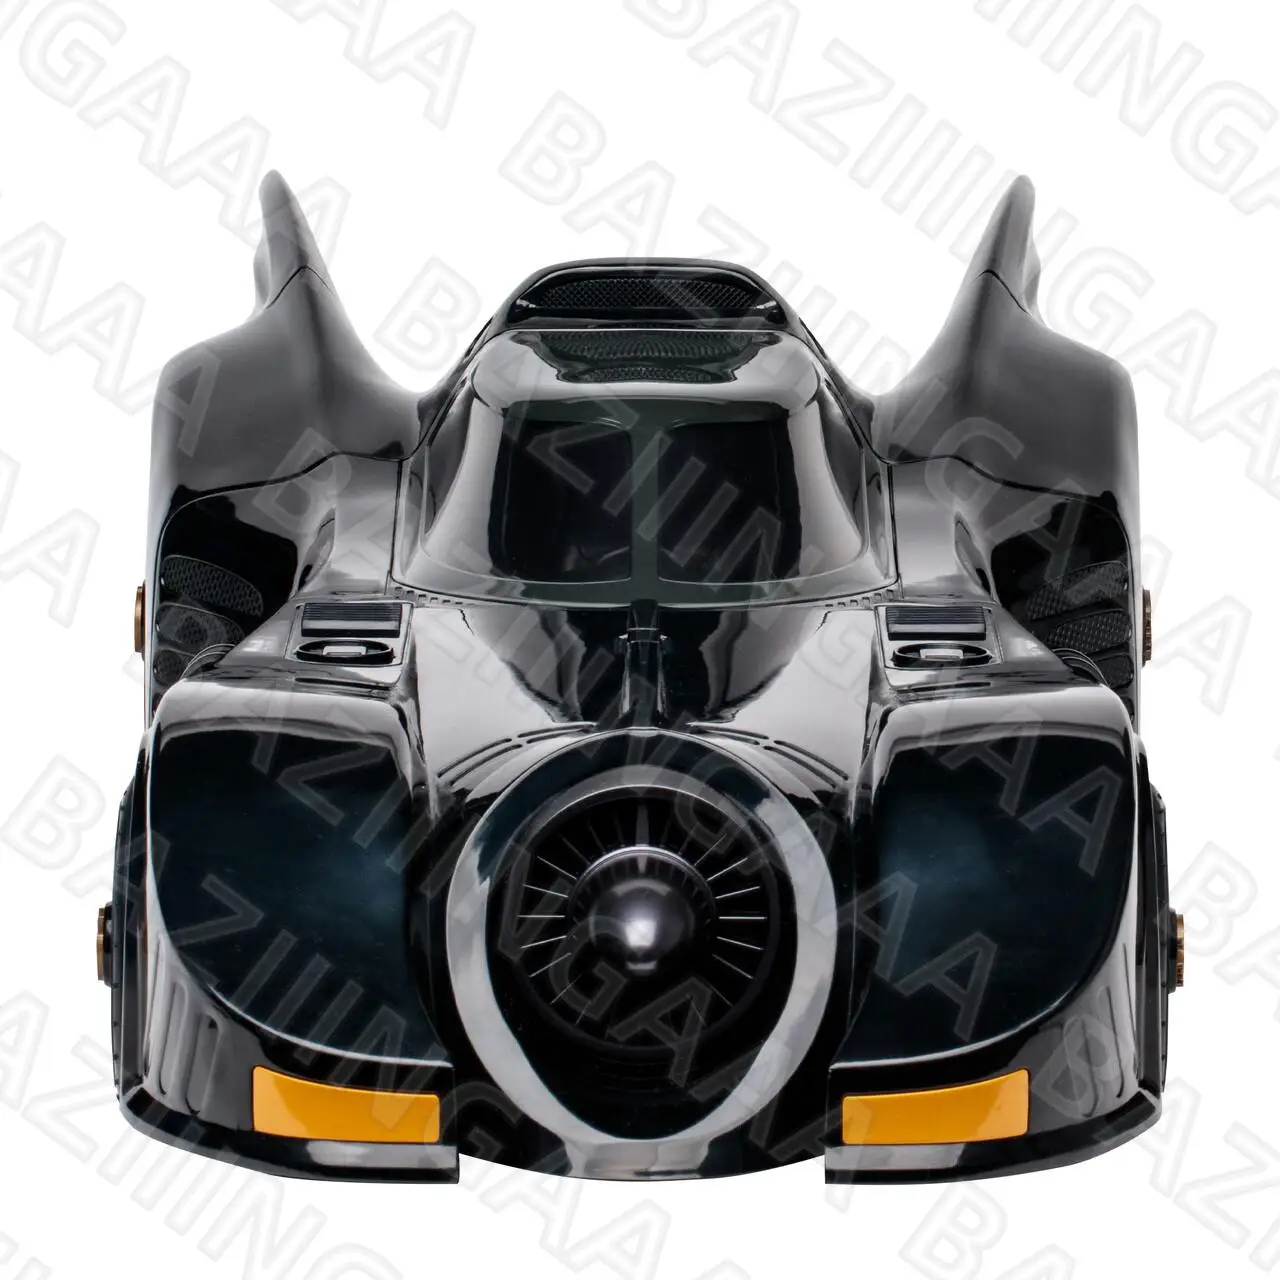 McFarlane Toys The Flash Movie Mega Bundle (12 pc) with MTS Exclusives Batmobile Batcycle Vehicle images - 6